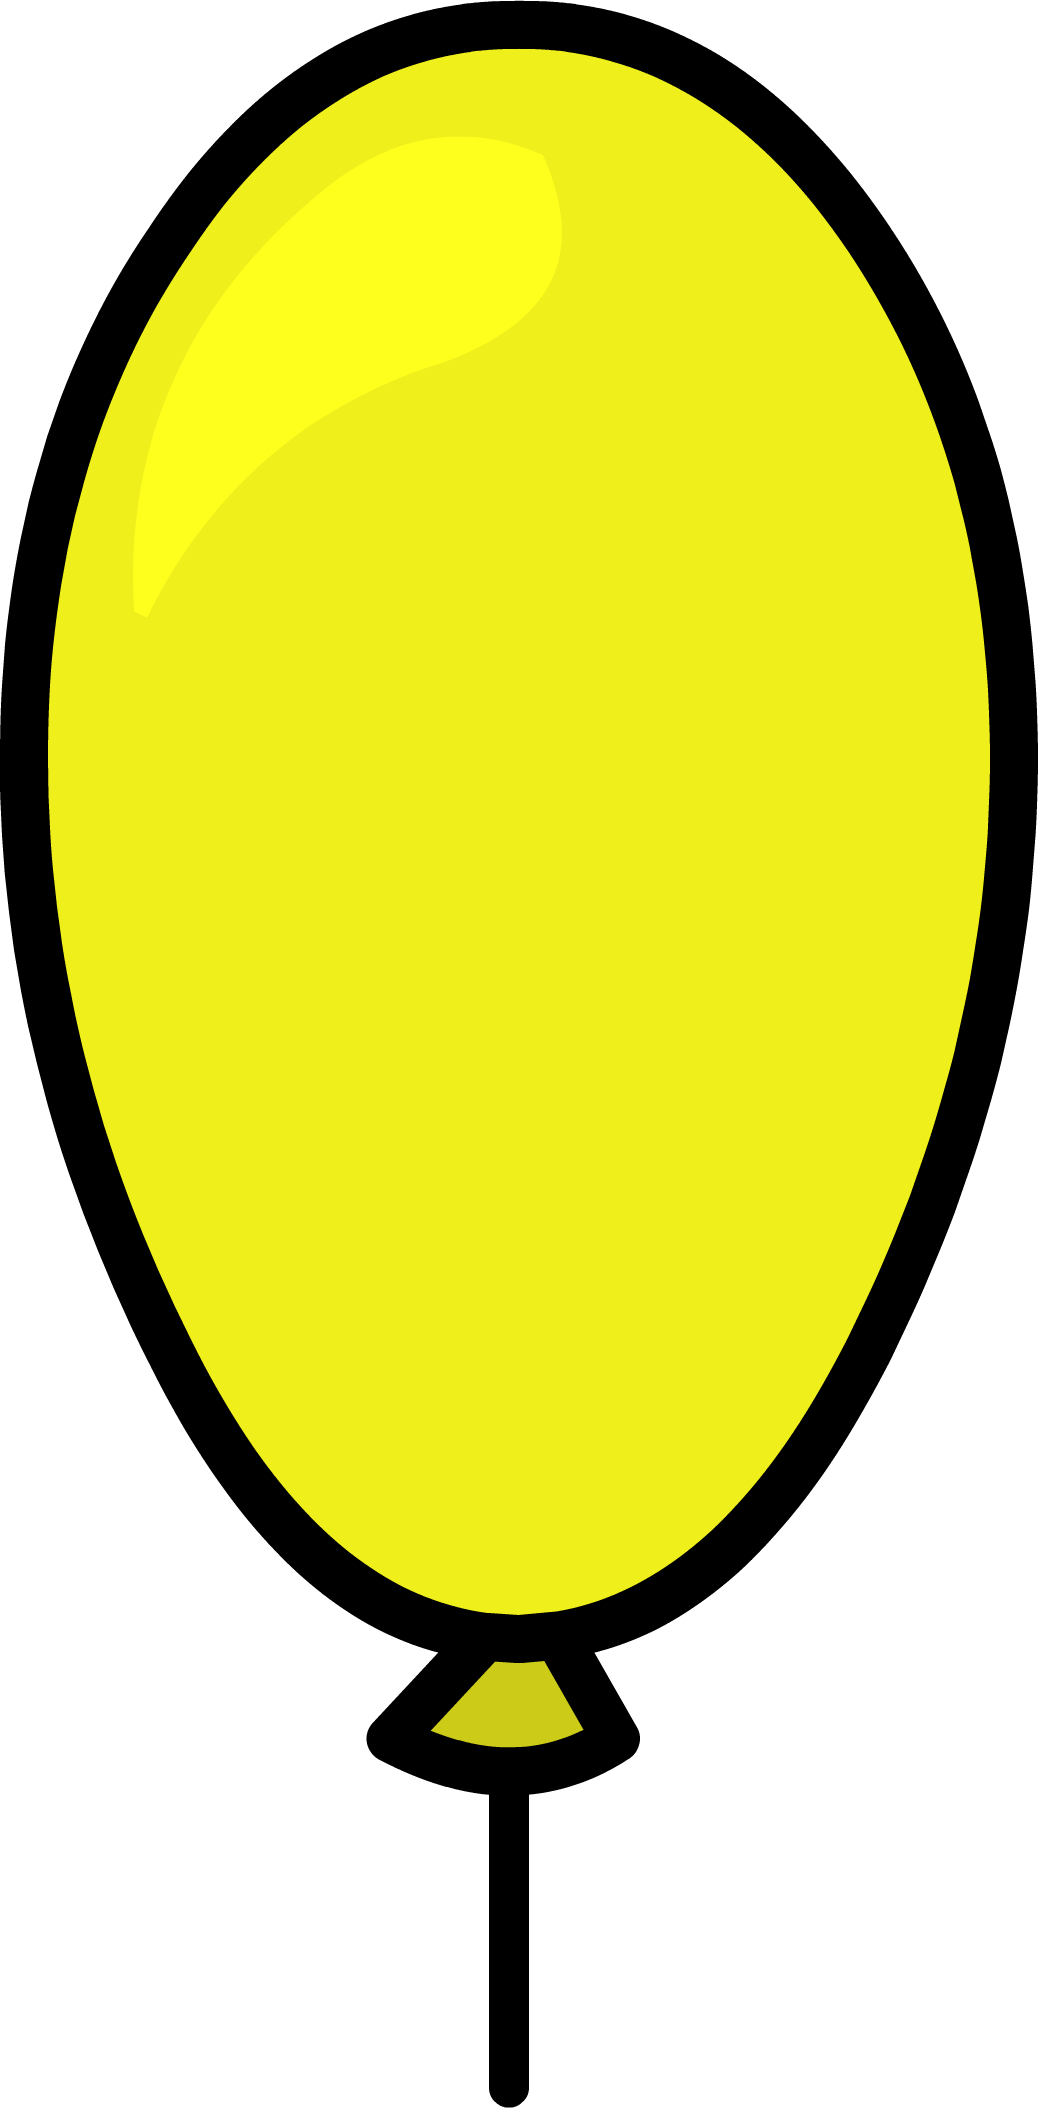 Geel ballon PNG Transparant Beeld